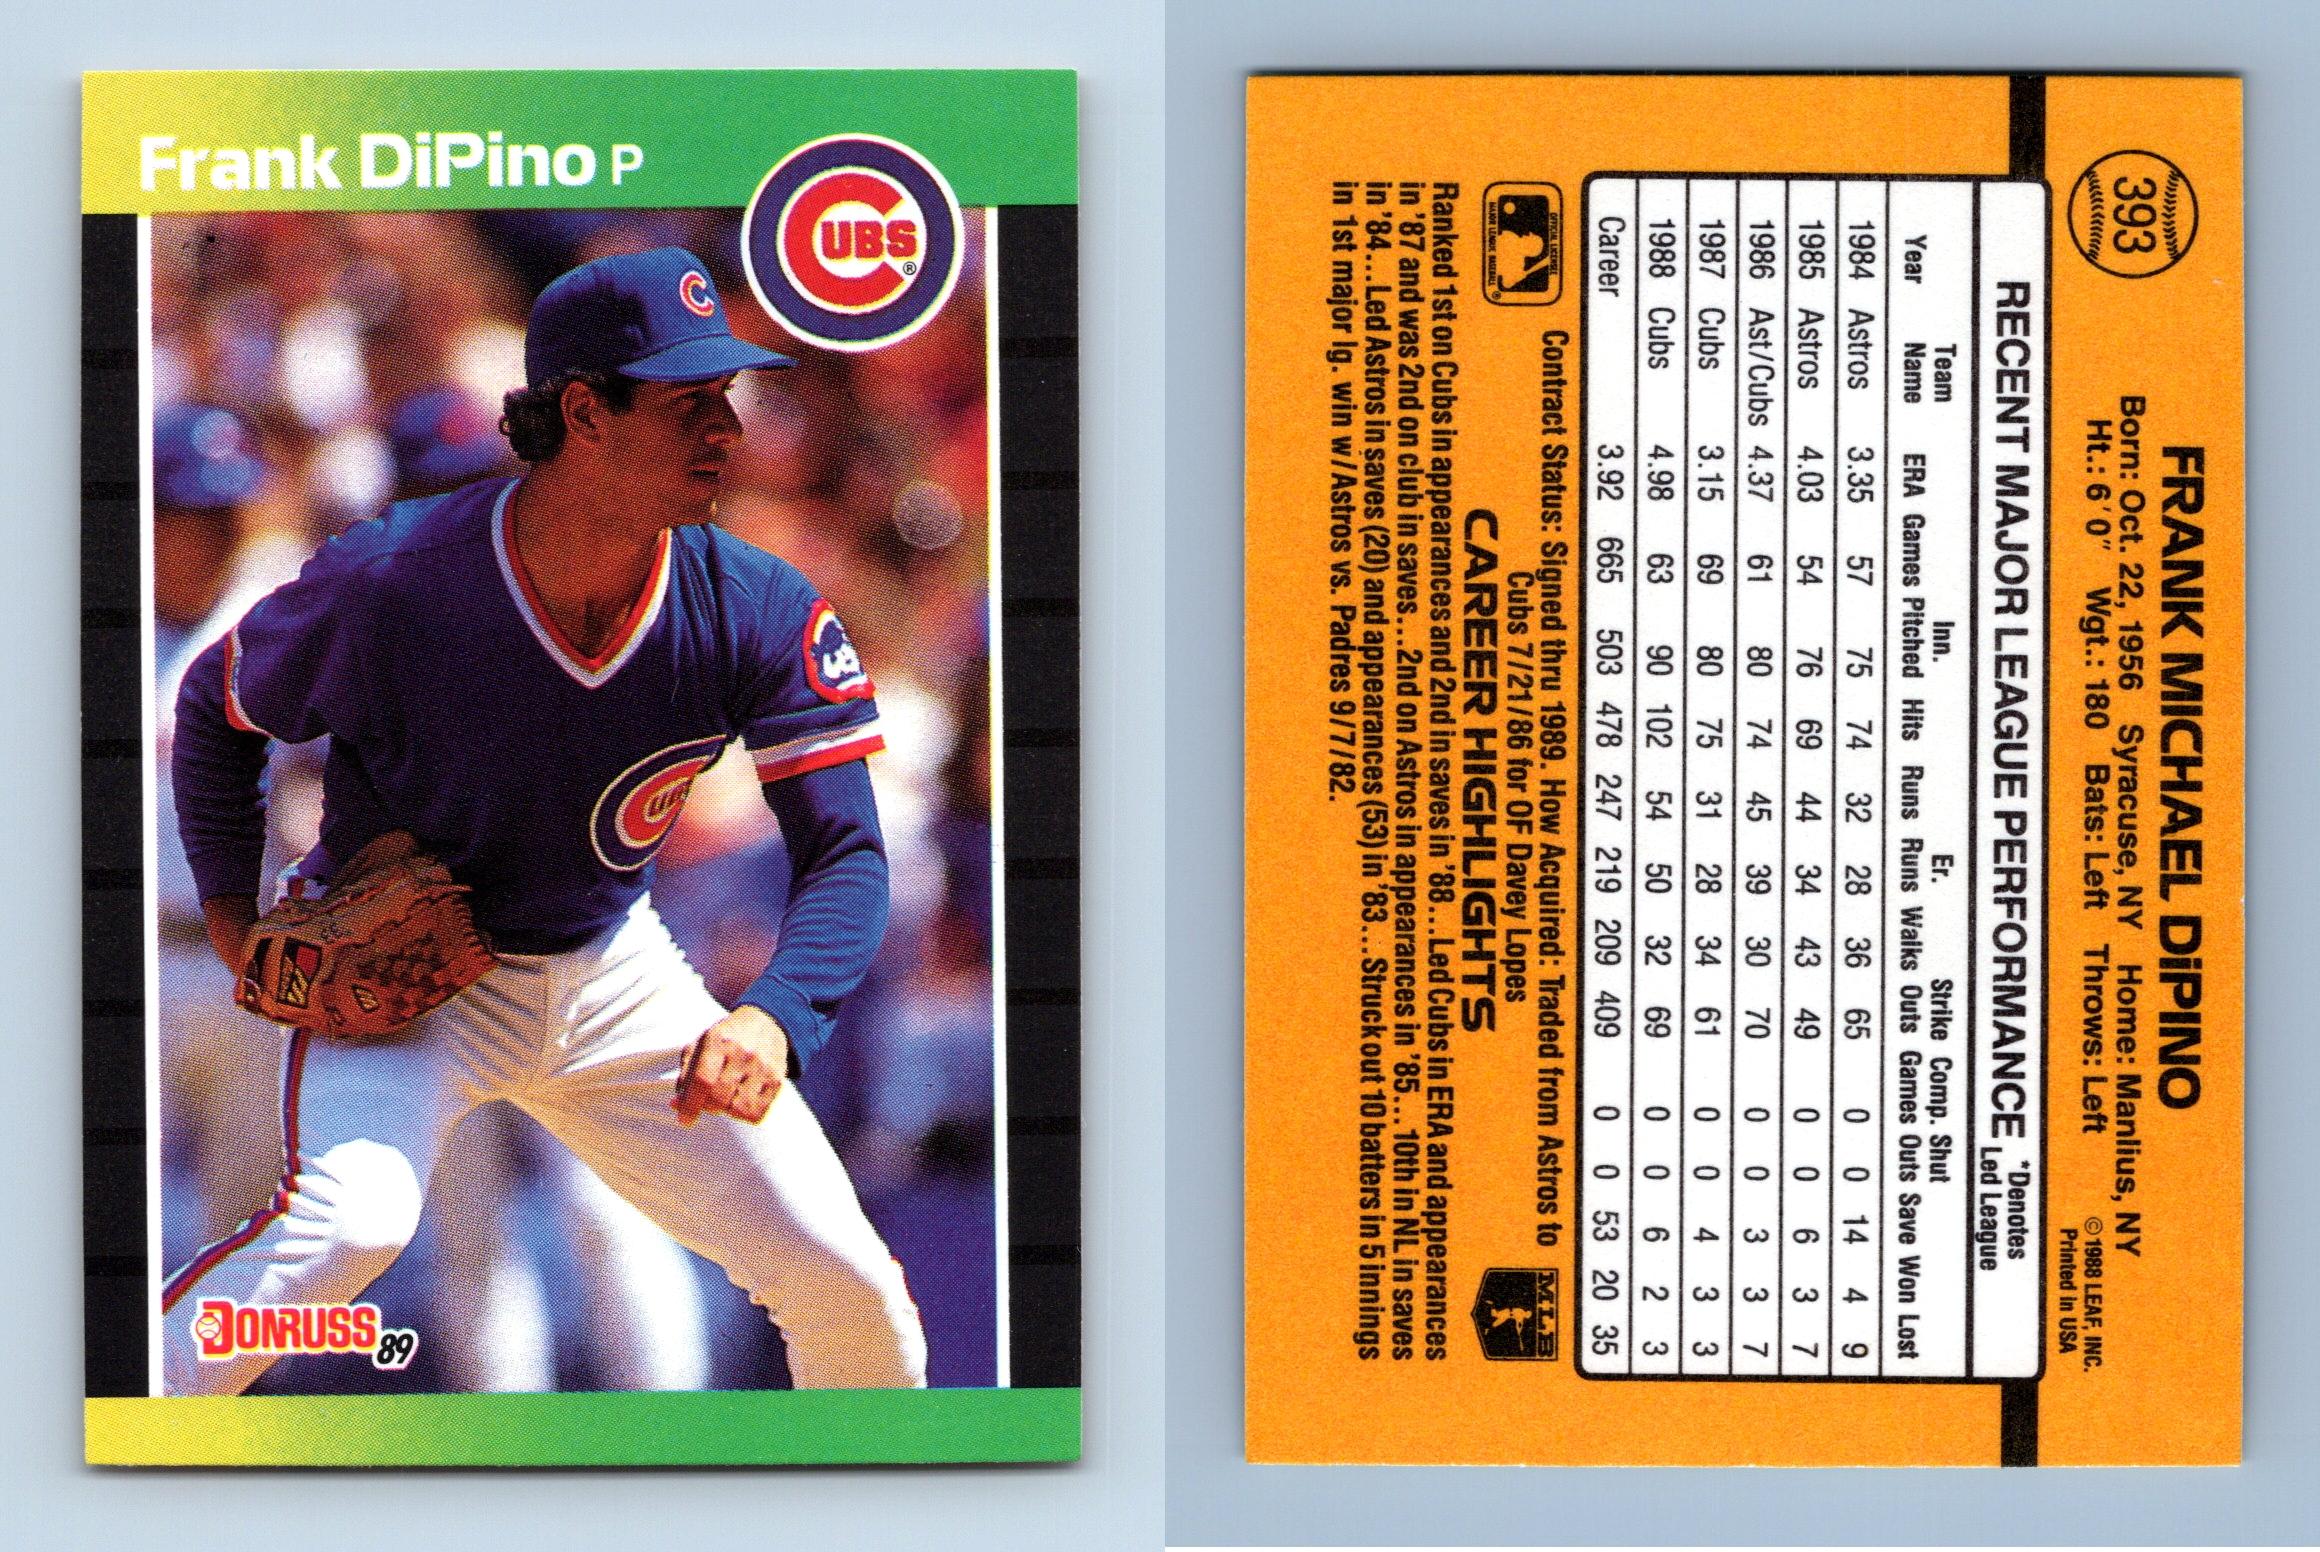 Rob Dibble - Reds #426 Donruss 1989 Baseball RC Trading Card